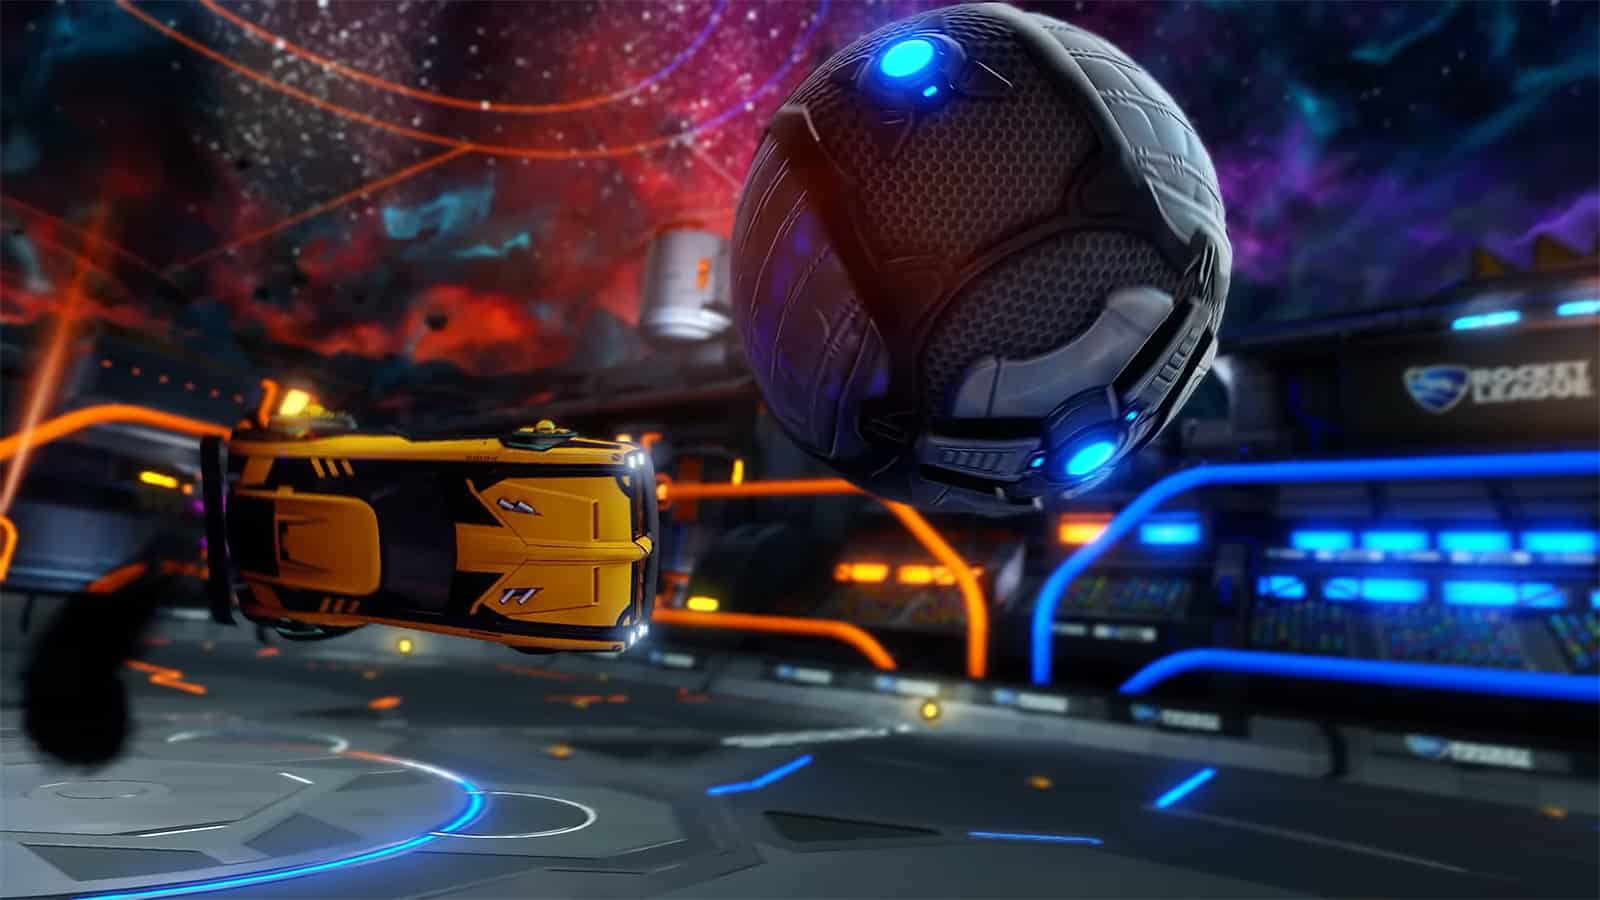 An image of a car hitting a ball towards a goal in Rocket League